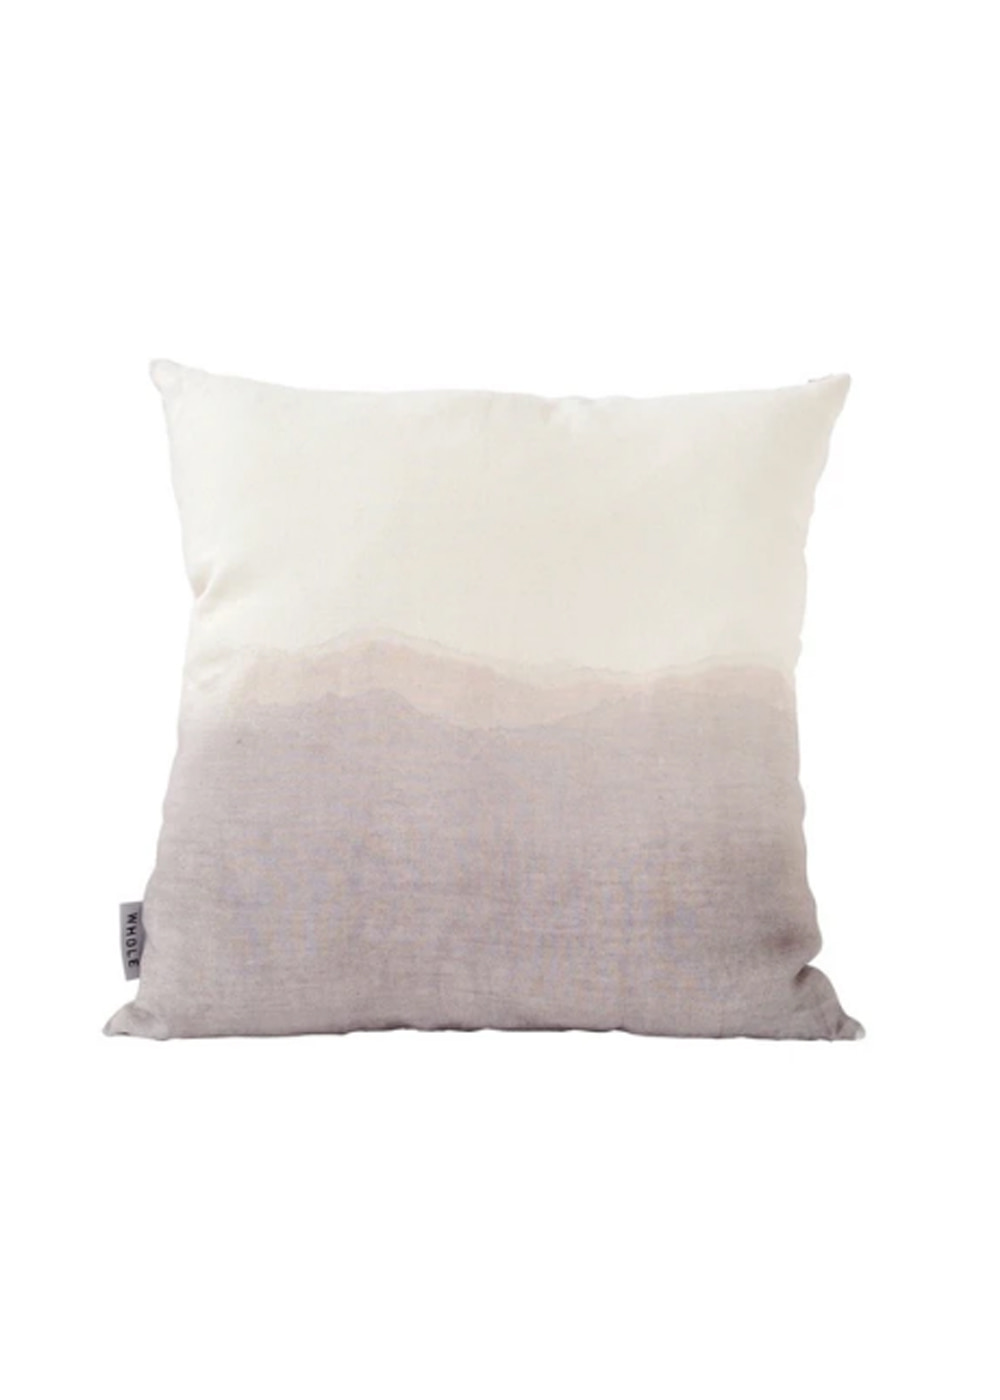 Woki Linen Cushion Cover - 4 colors 